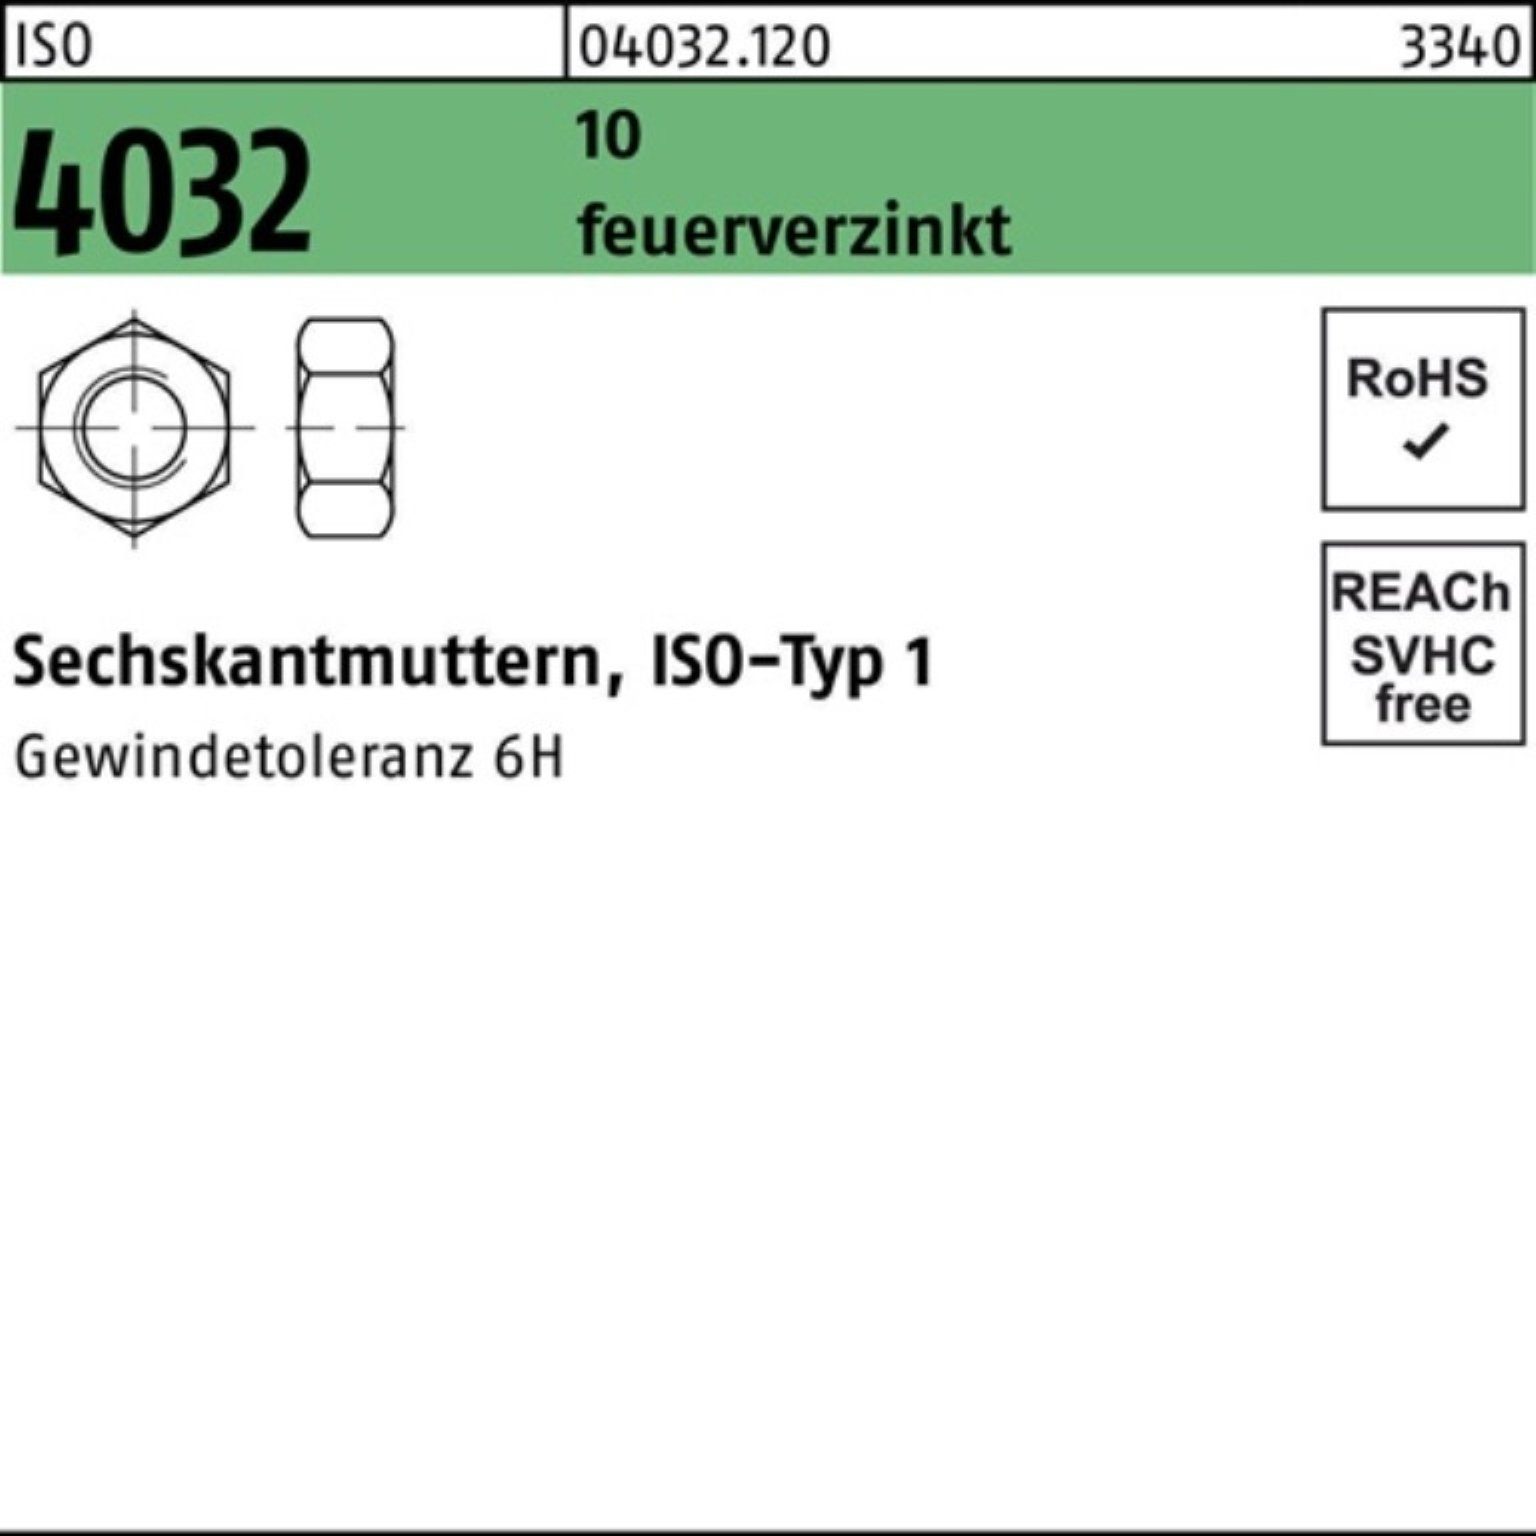 Pack 25 10 M27 40 feuerverz. Stück ISO Sechskantmutter Muttern 4032 ISO 100er Bufab